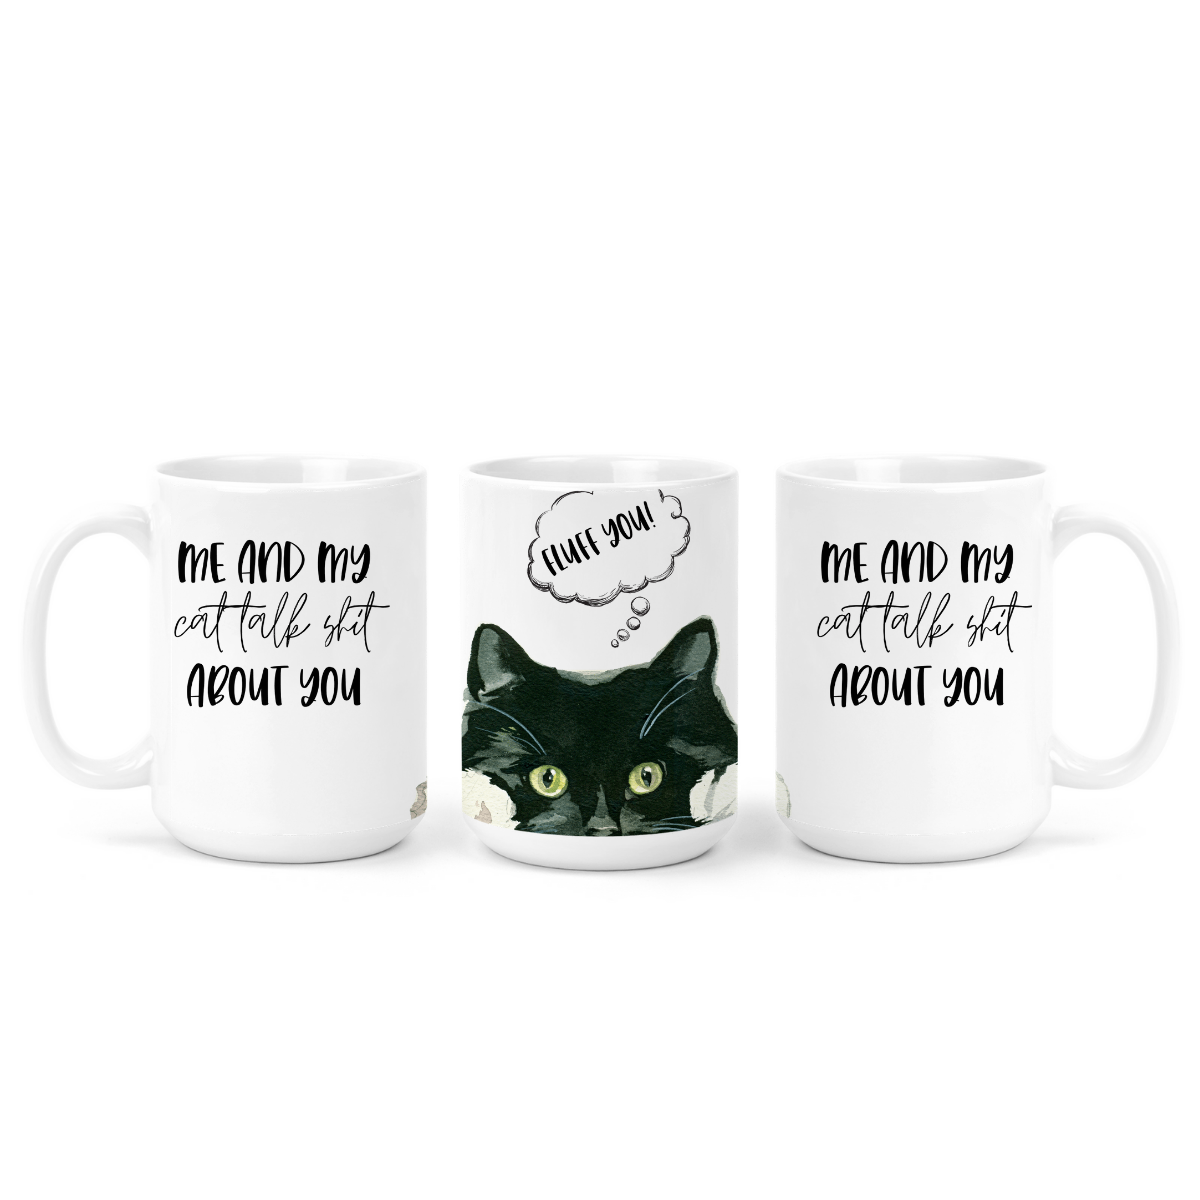 Tuxedo Me And My Cat Talk Shit | Mug - The Pretty Things.ca